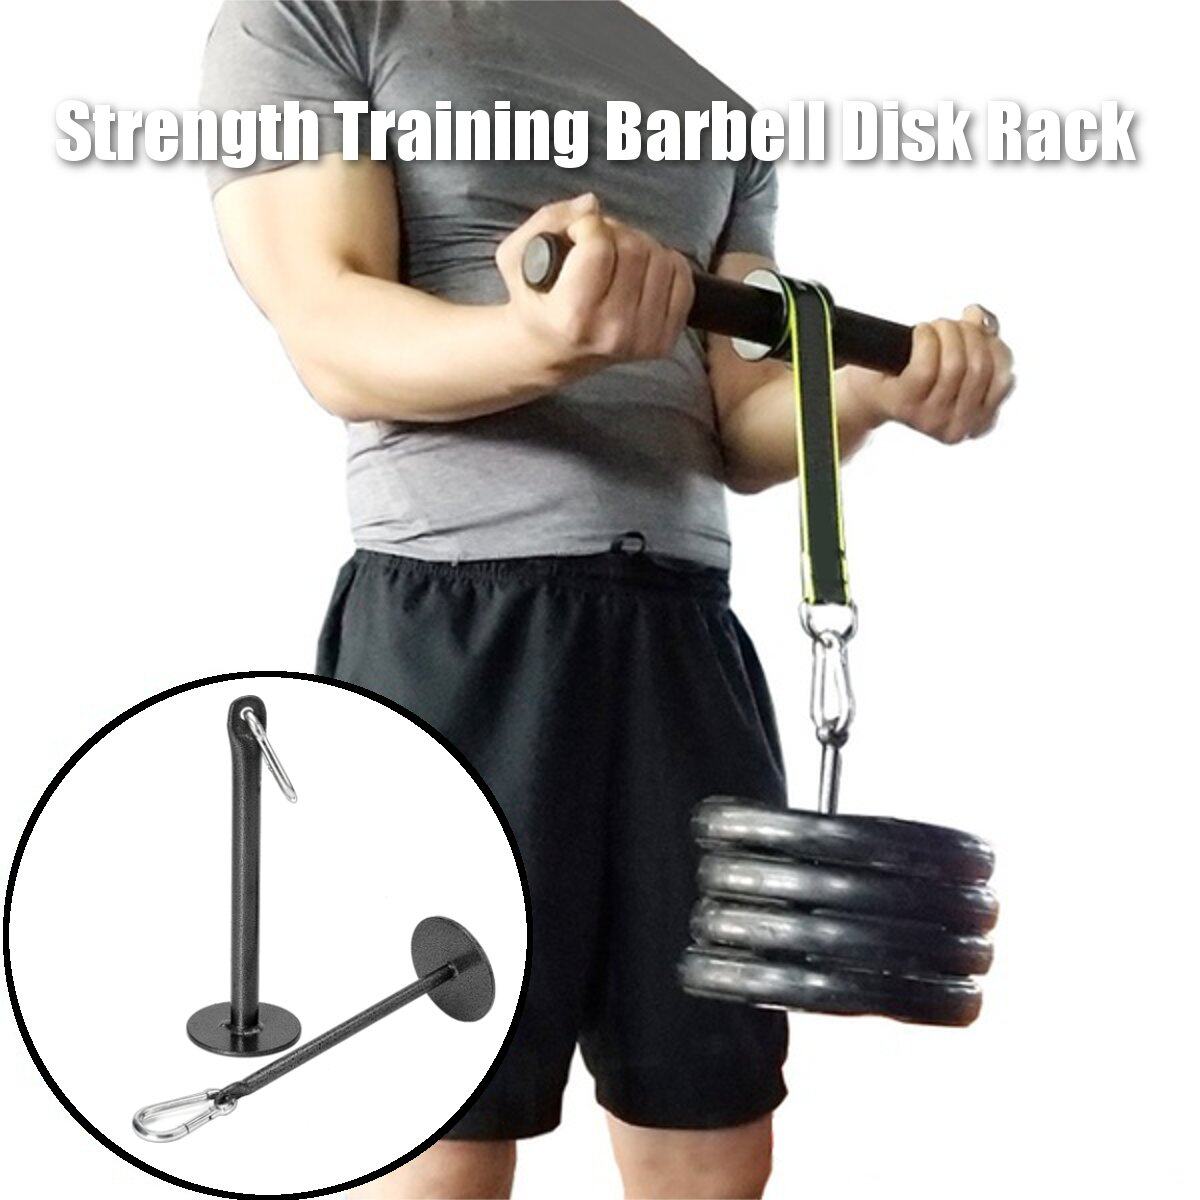 Forearm Wrist Roller Strength Training Kits Barbell Disk Rack Hand Arm